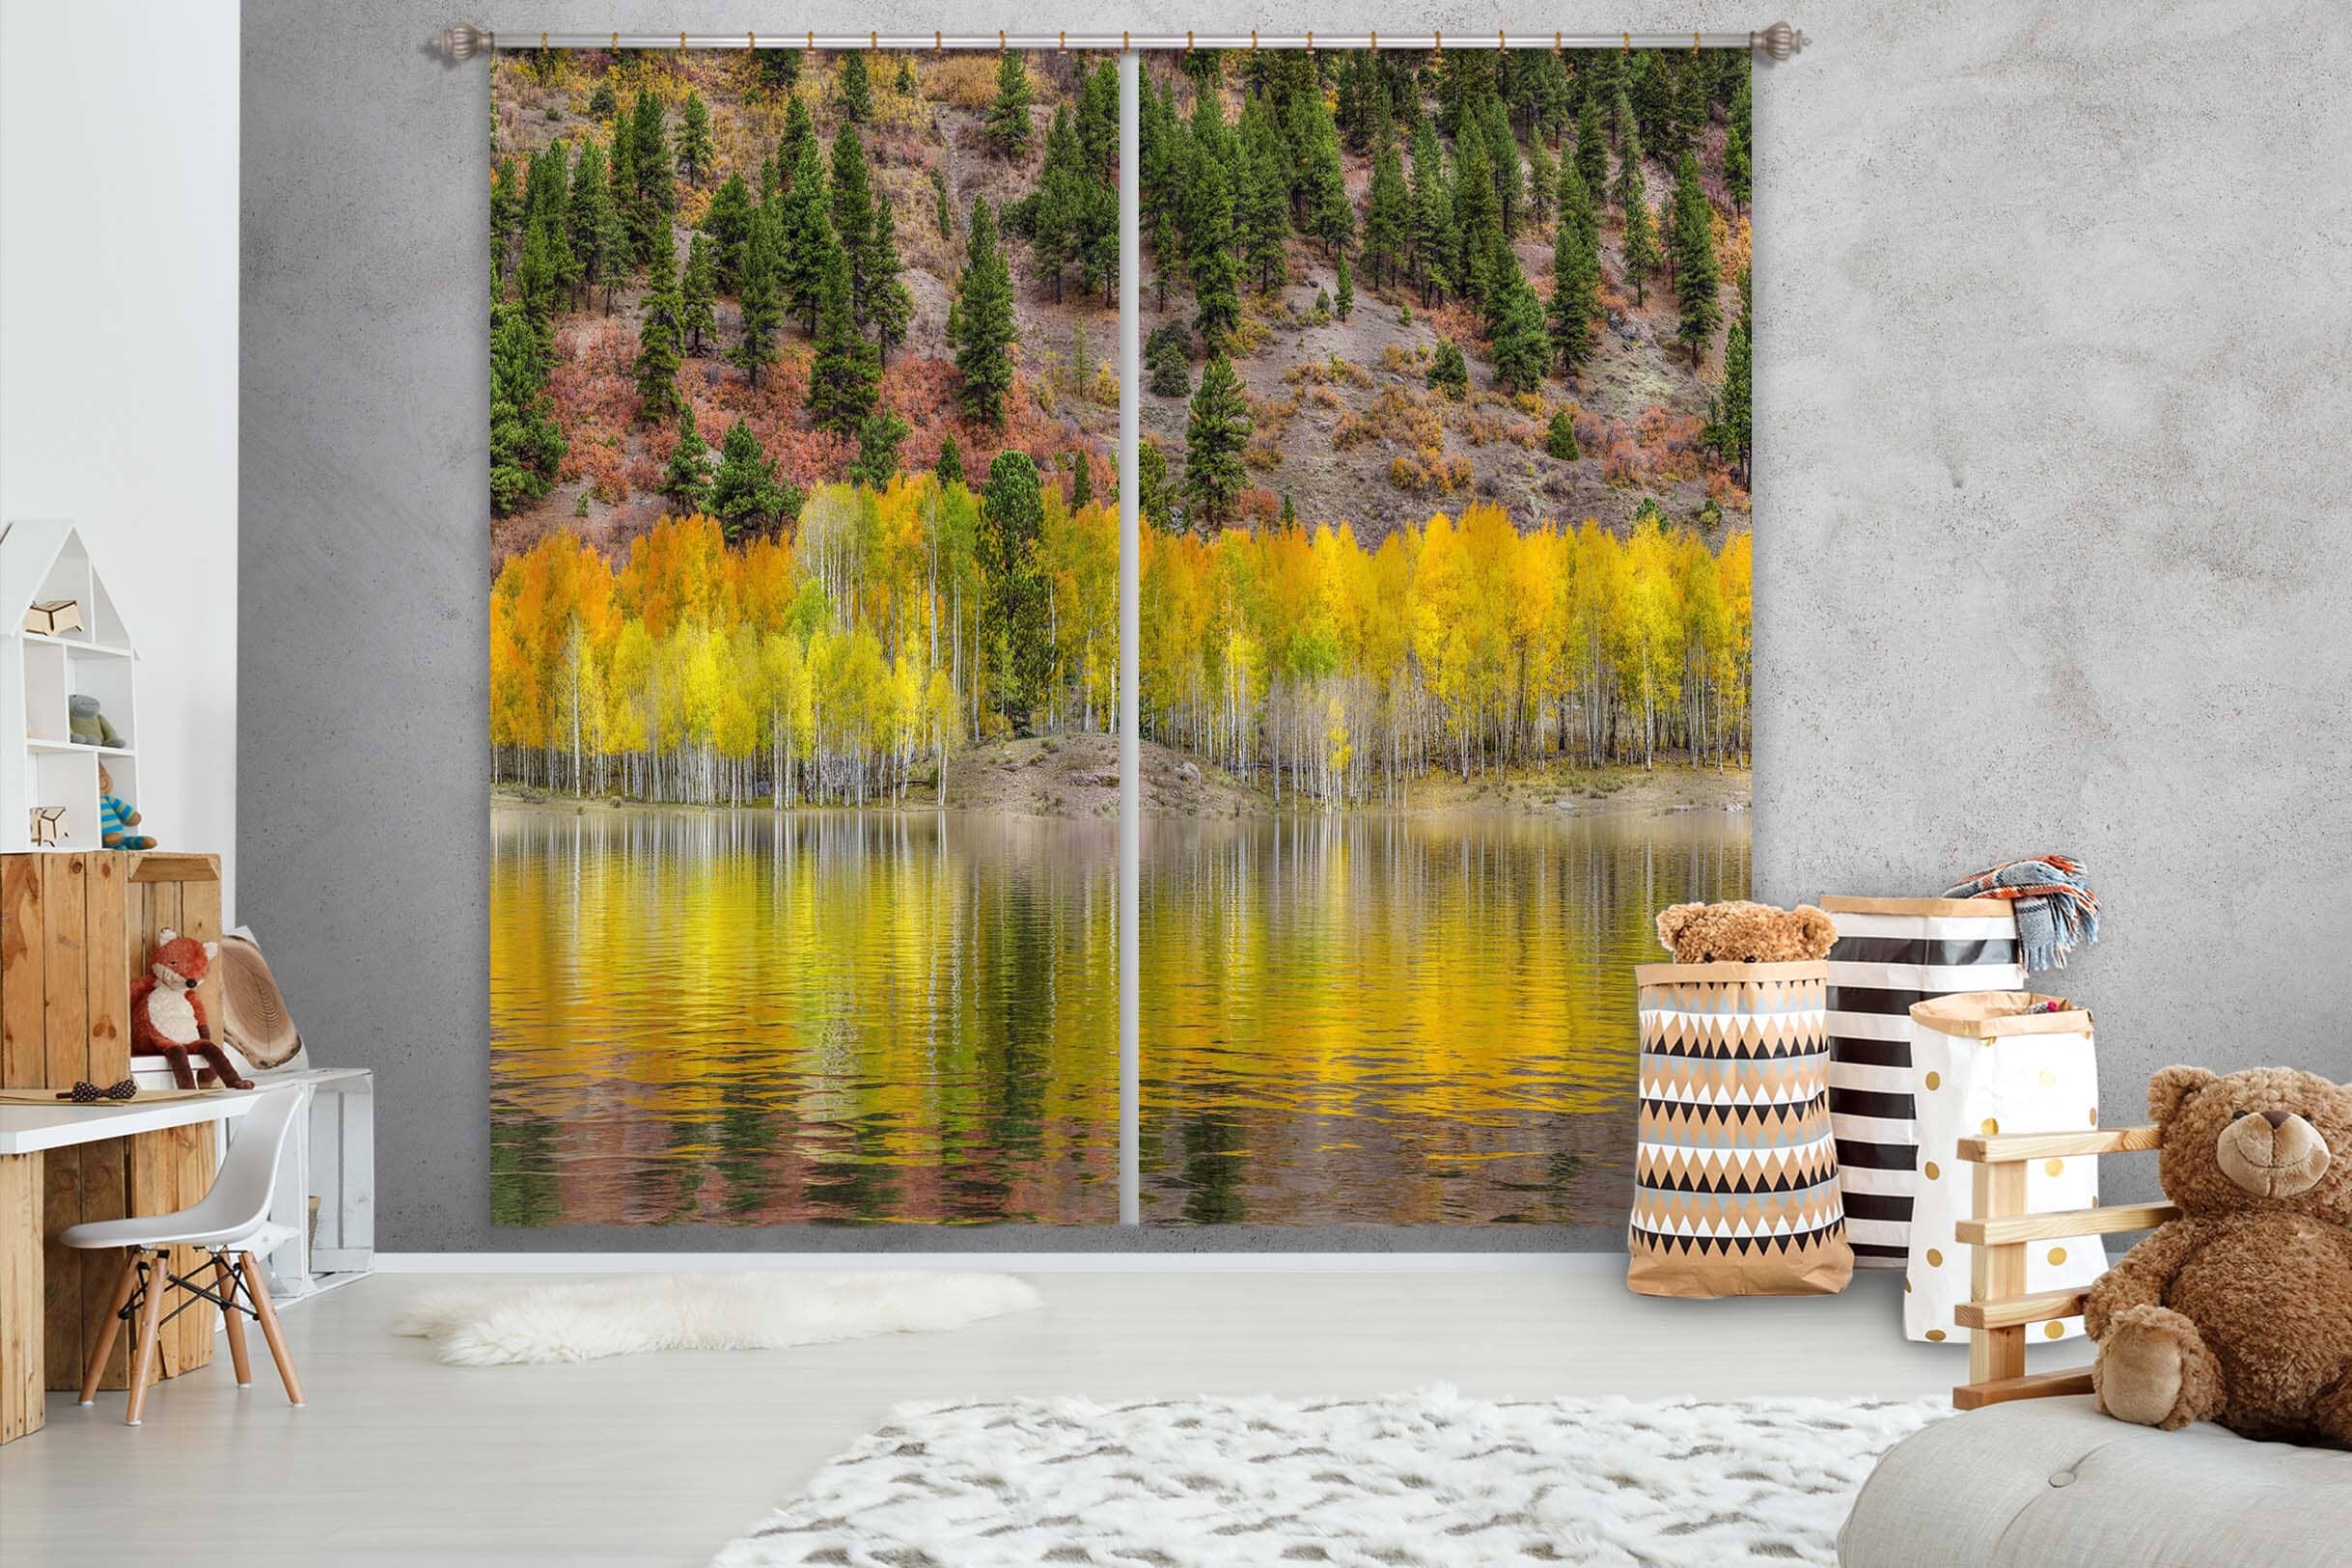 3D Forest Landscape 037 Marco Carmassi Curtain Curtains Drapes Curtains AJ Creativity Home 